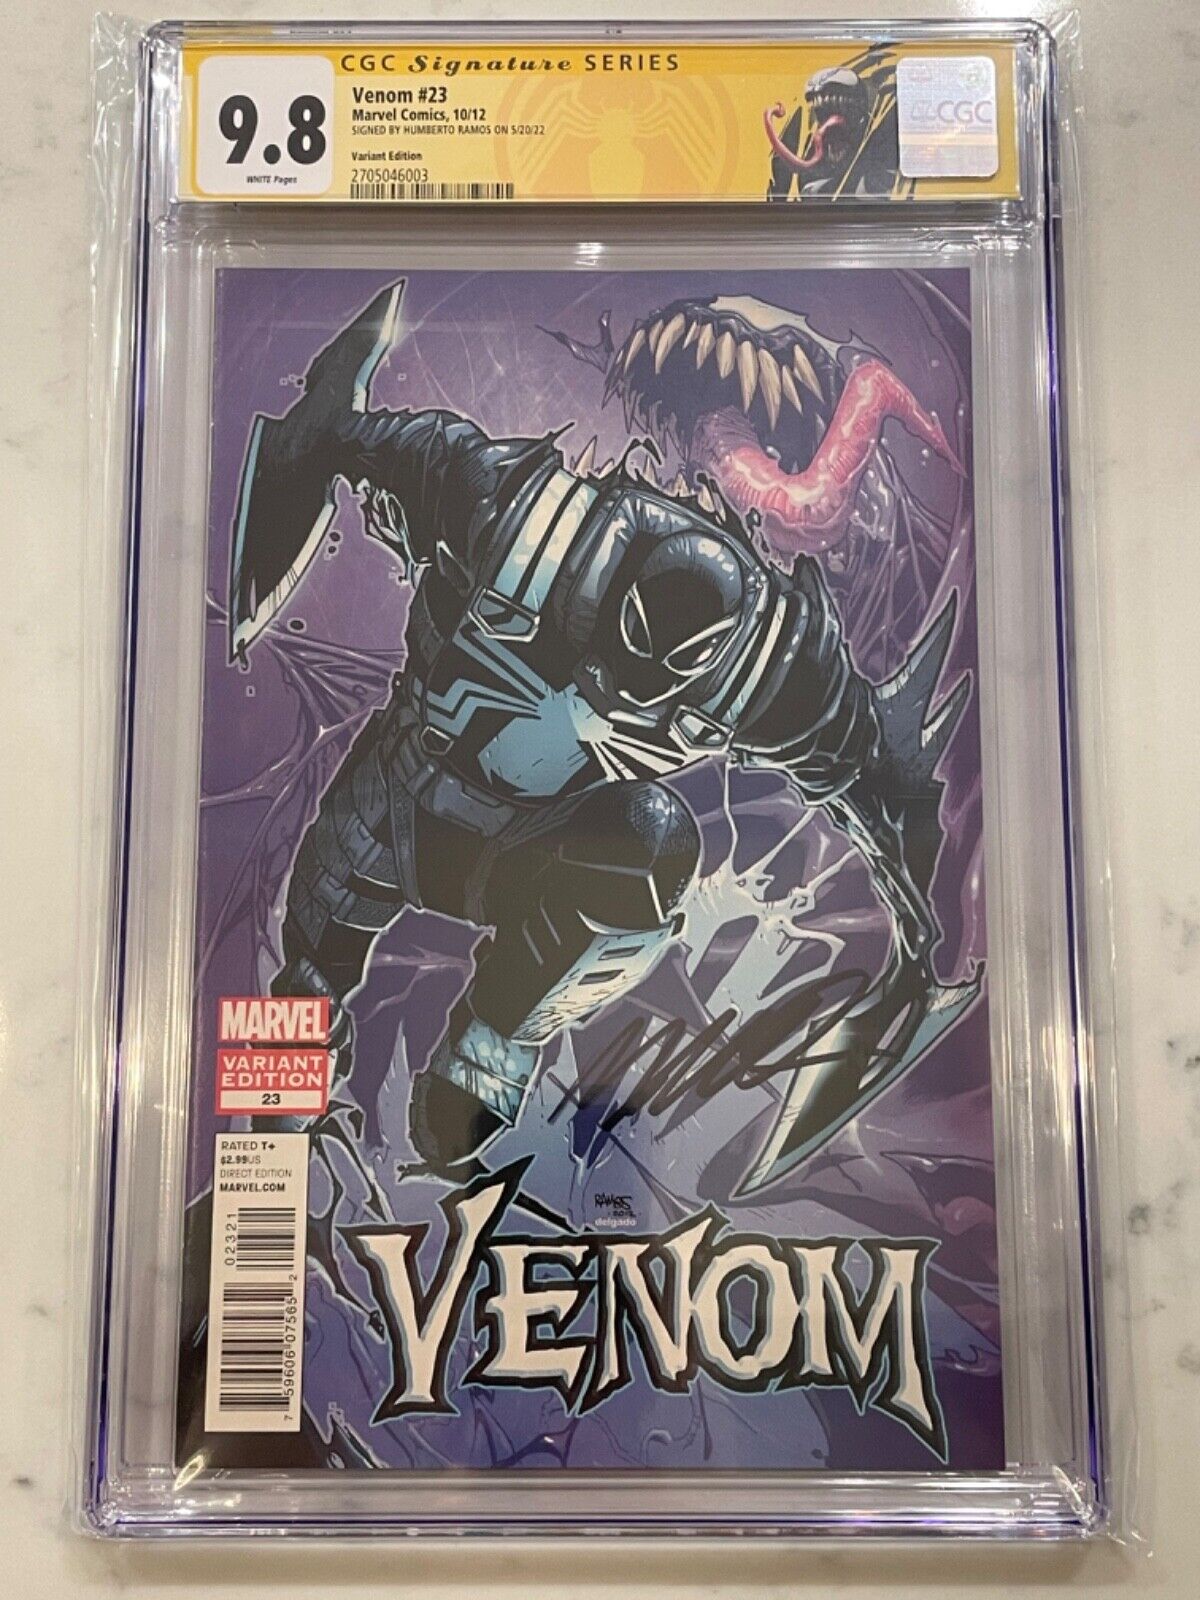 Venom #23 1:30 Ramos Variant CGC 9.8 SS Signed by Humberto Ramos Custom Label